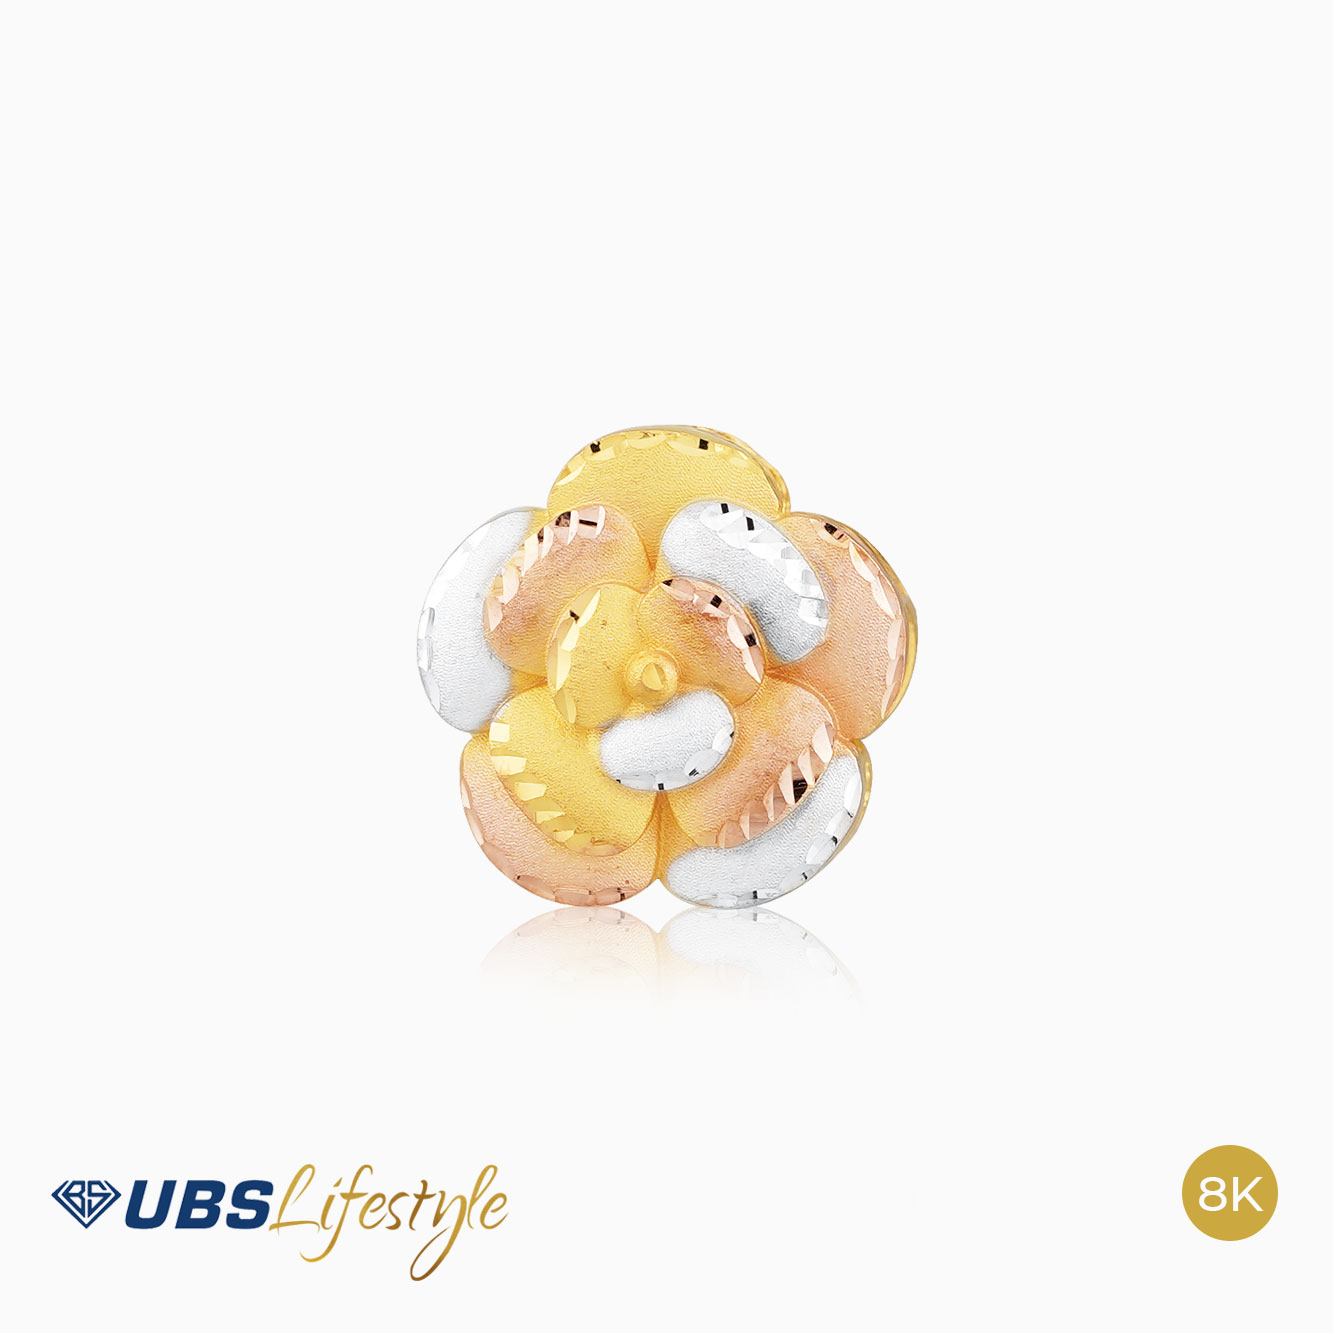 UBS Liontin Emas Sakura - Cdm0112 - 8K